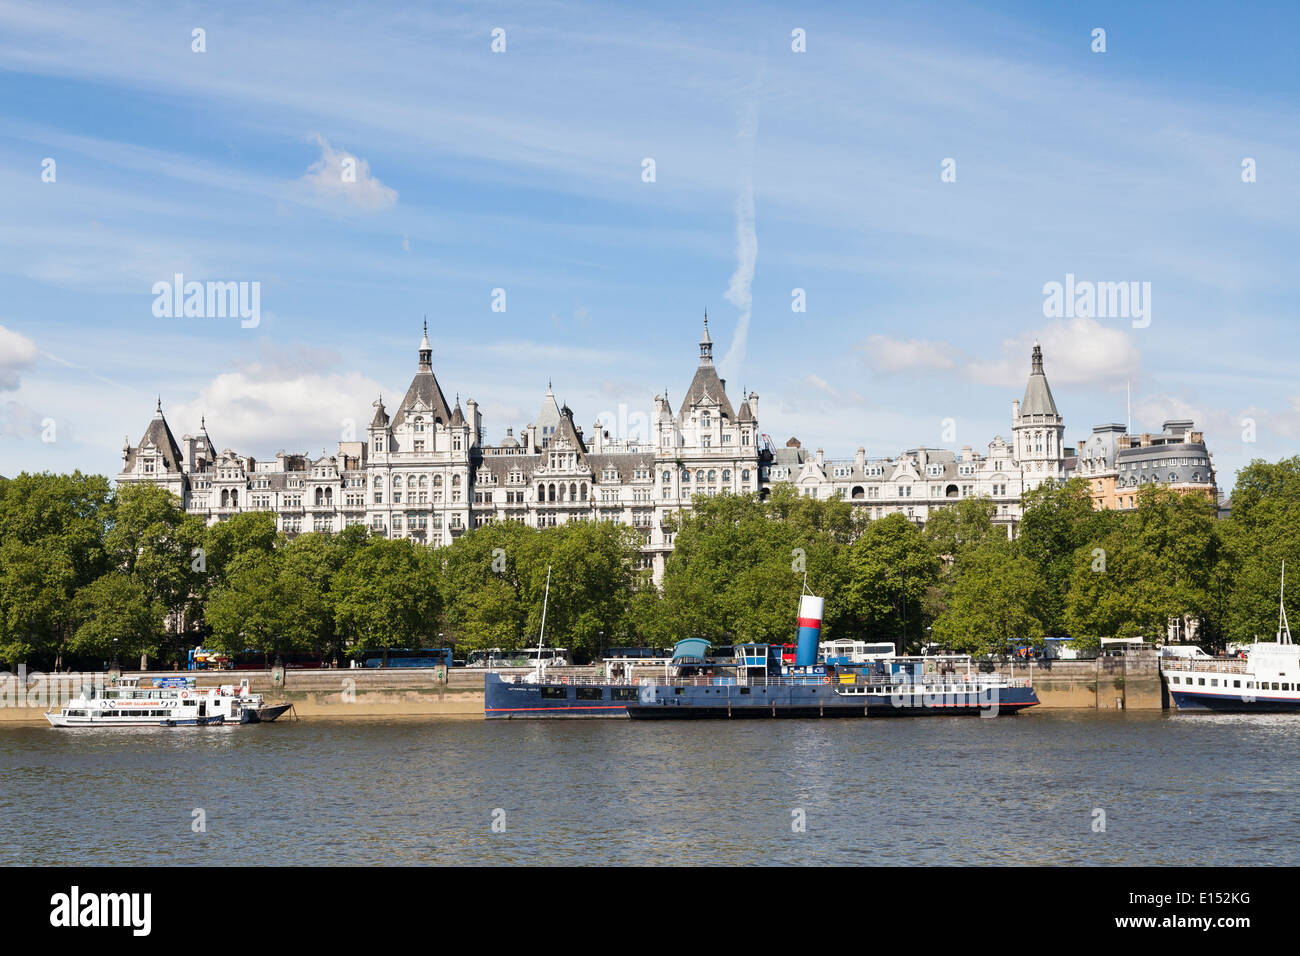 Klassische Architektur im Londoner Victoria Embankment. Stockfoto